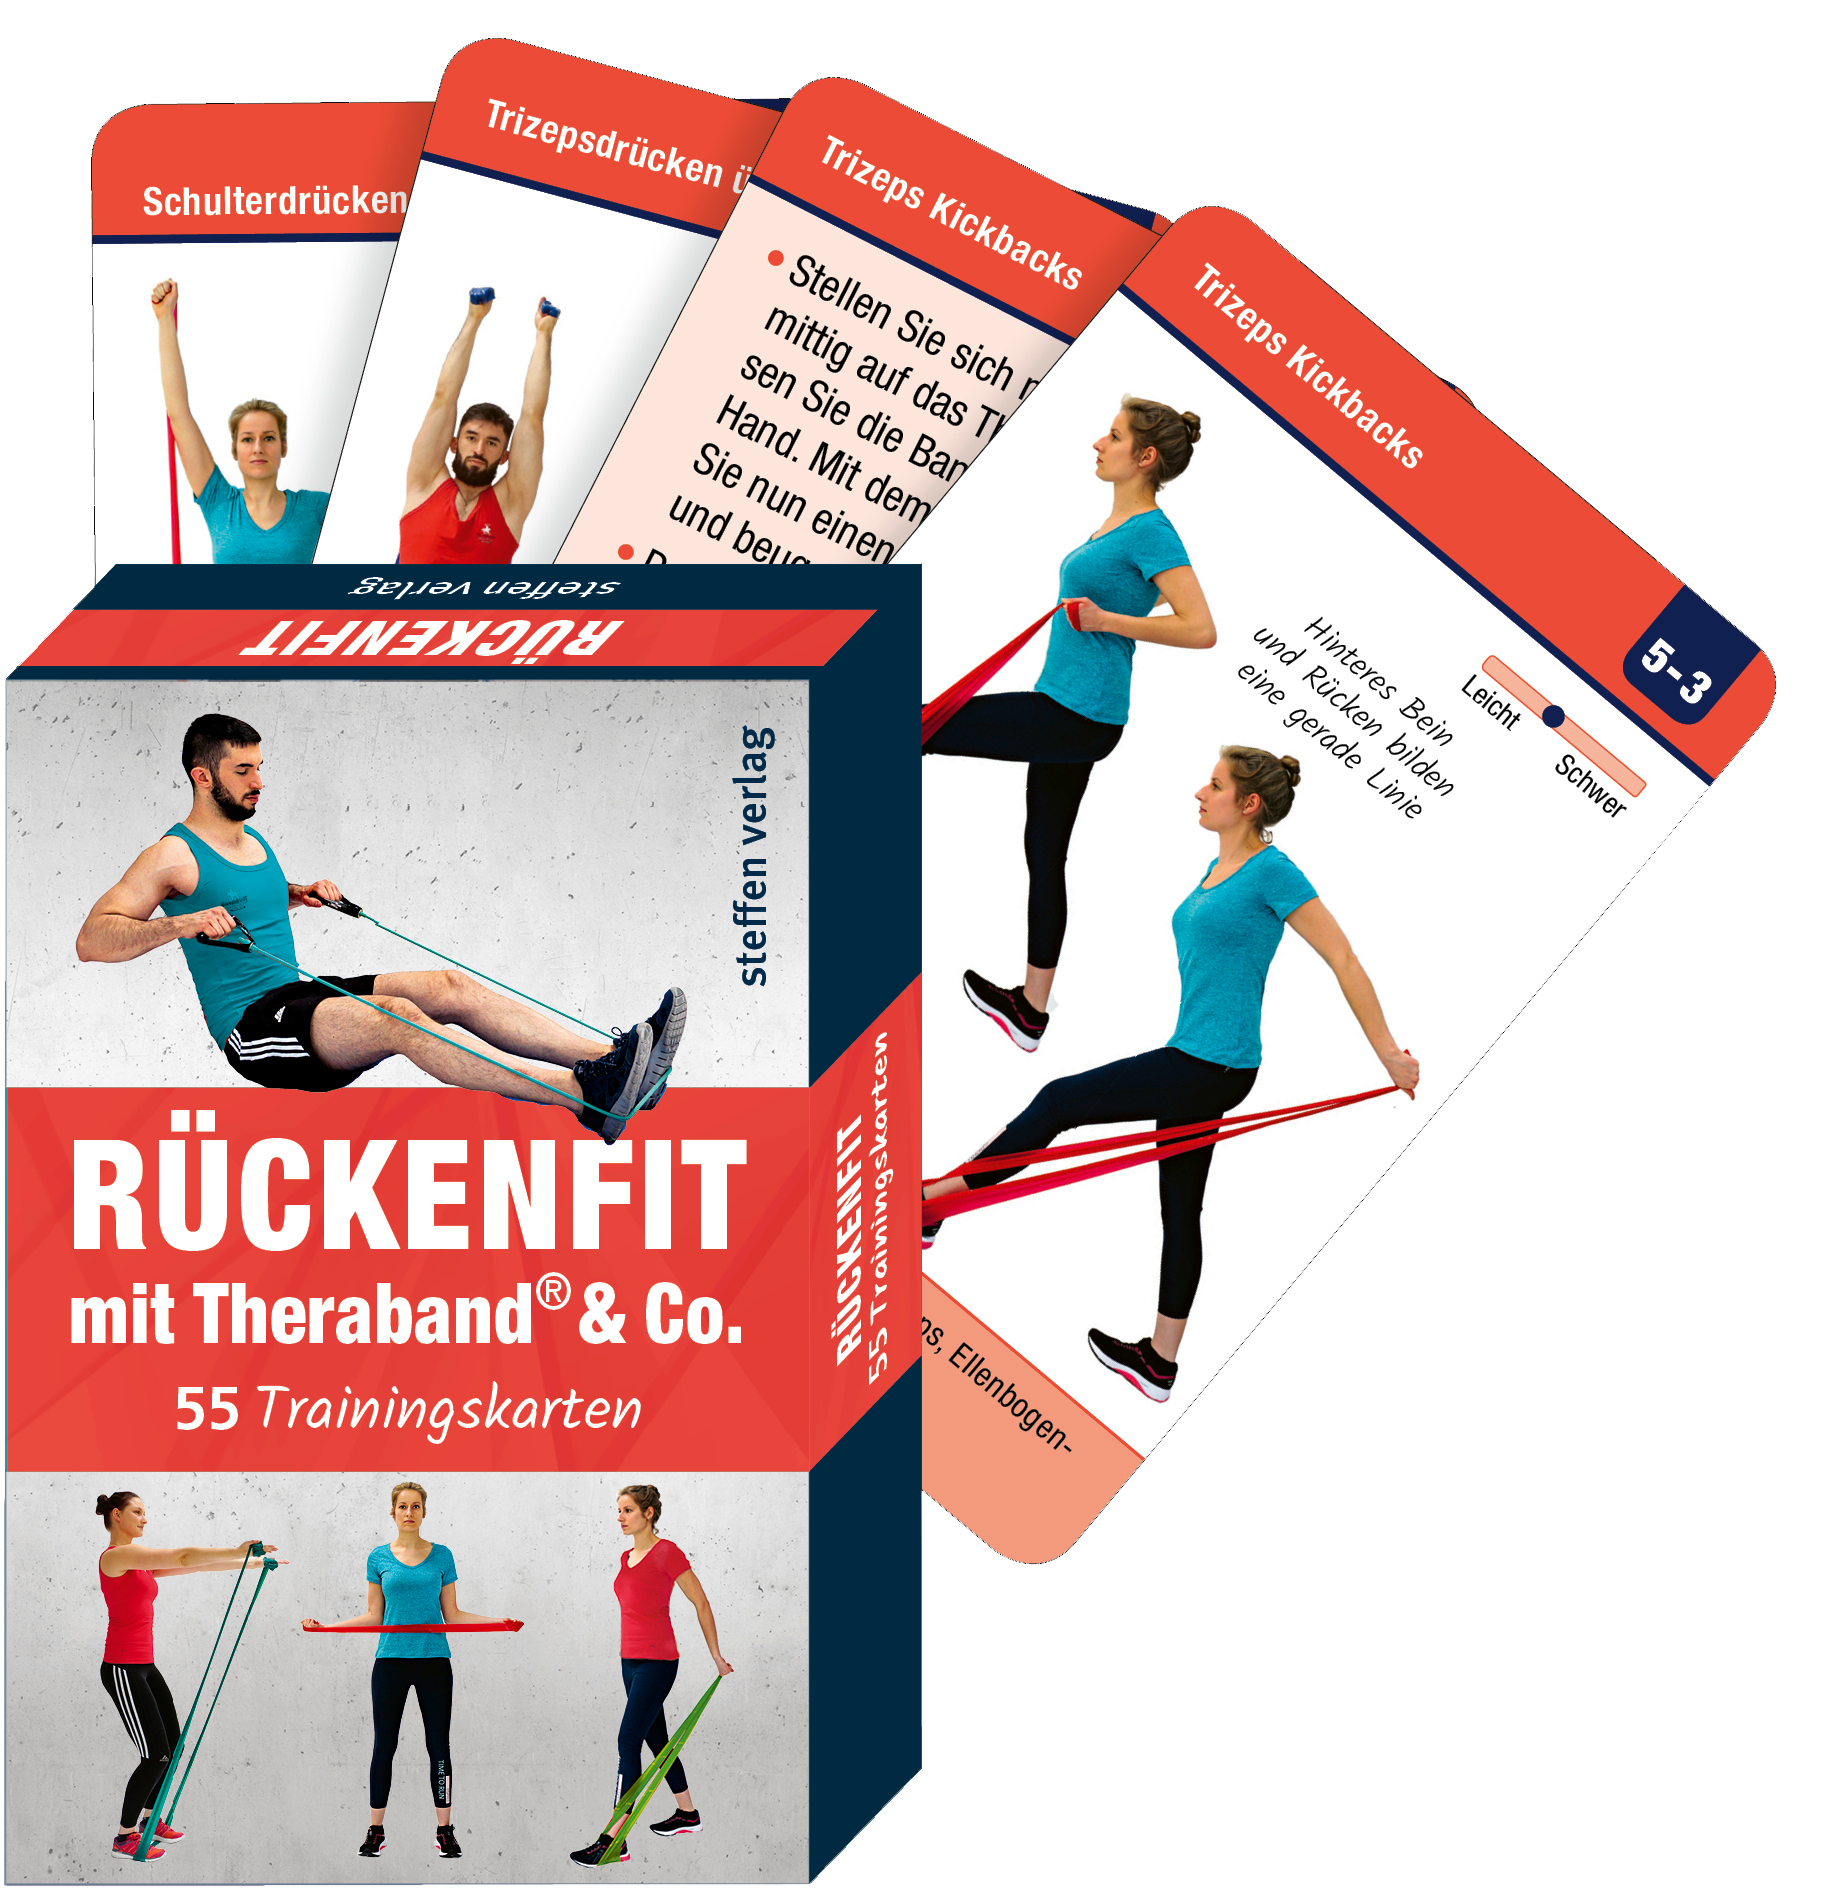 Thomschke_Trainingskarten_Ruckentraining